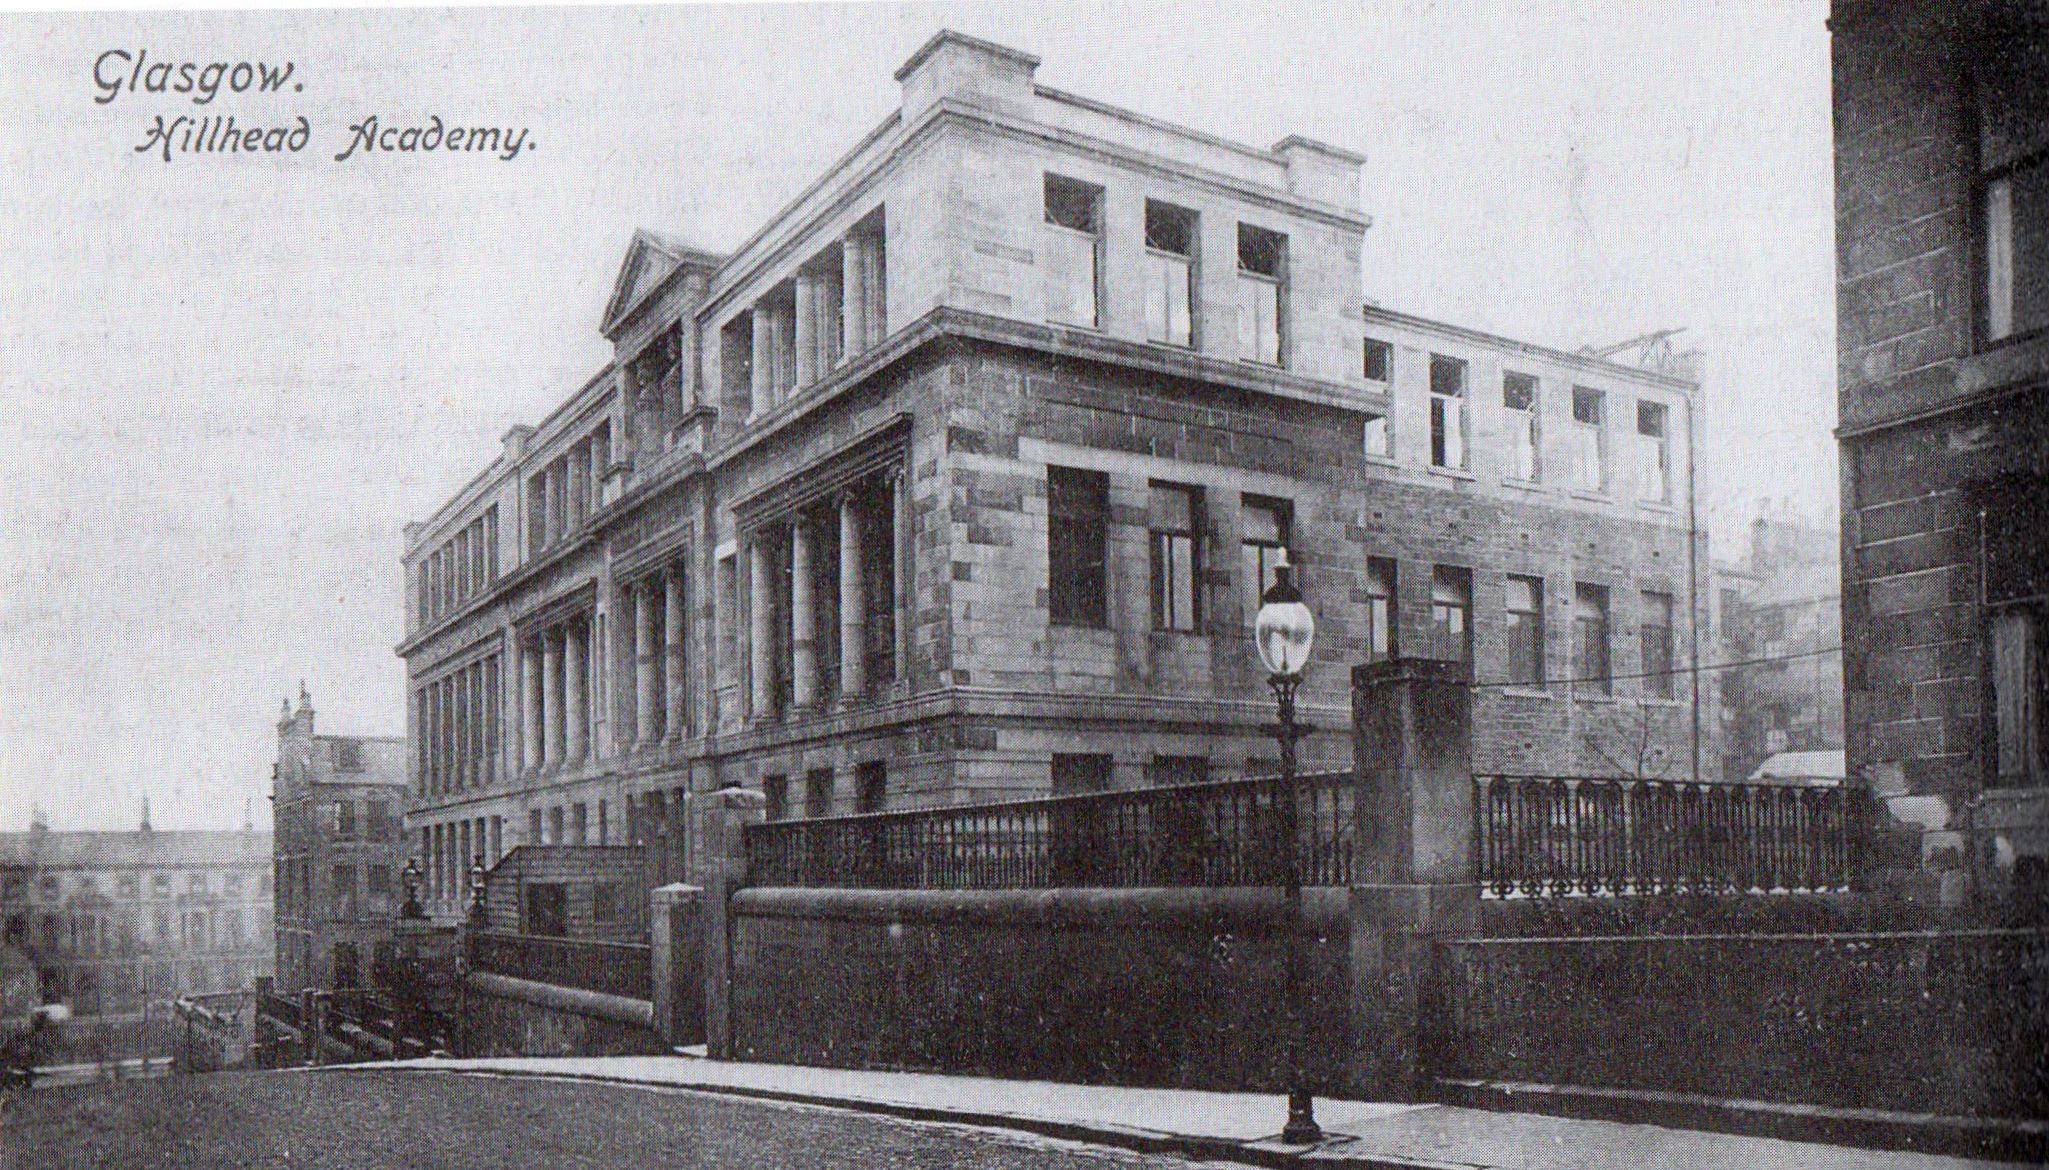 Hillhead Academy in Glasgow